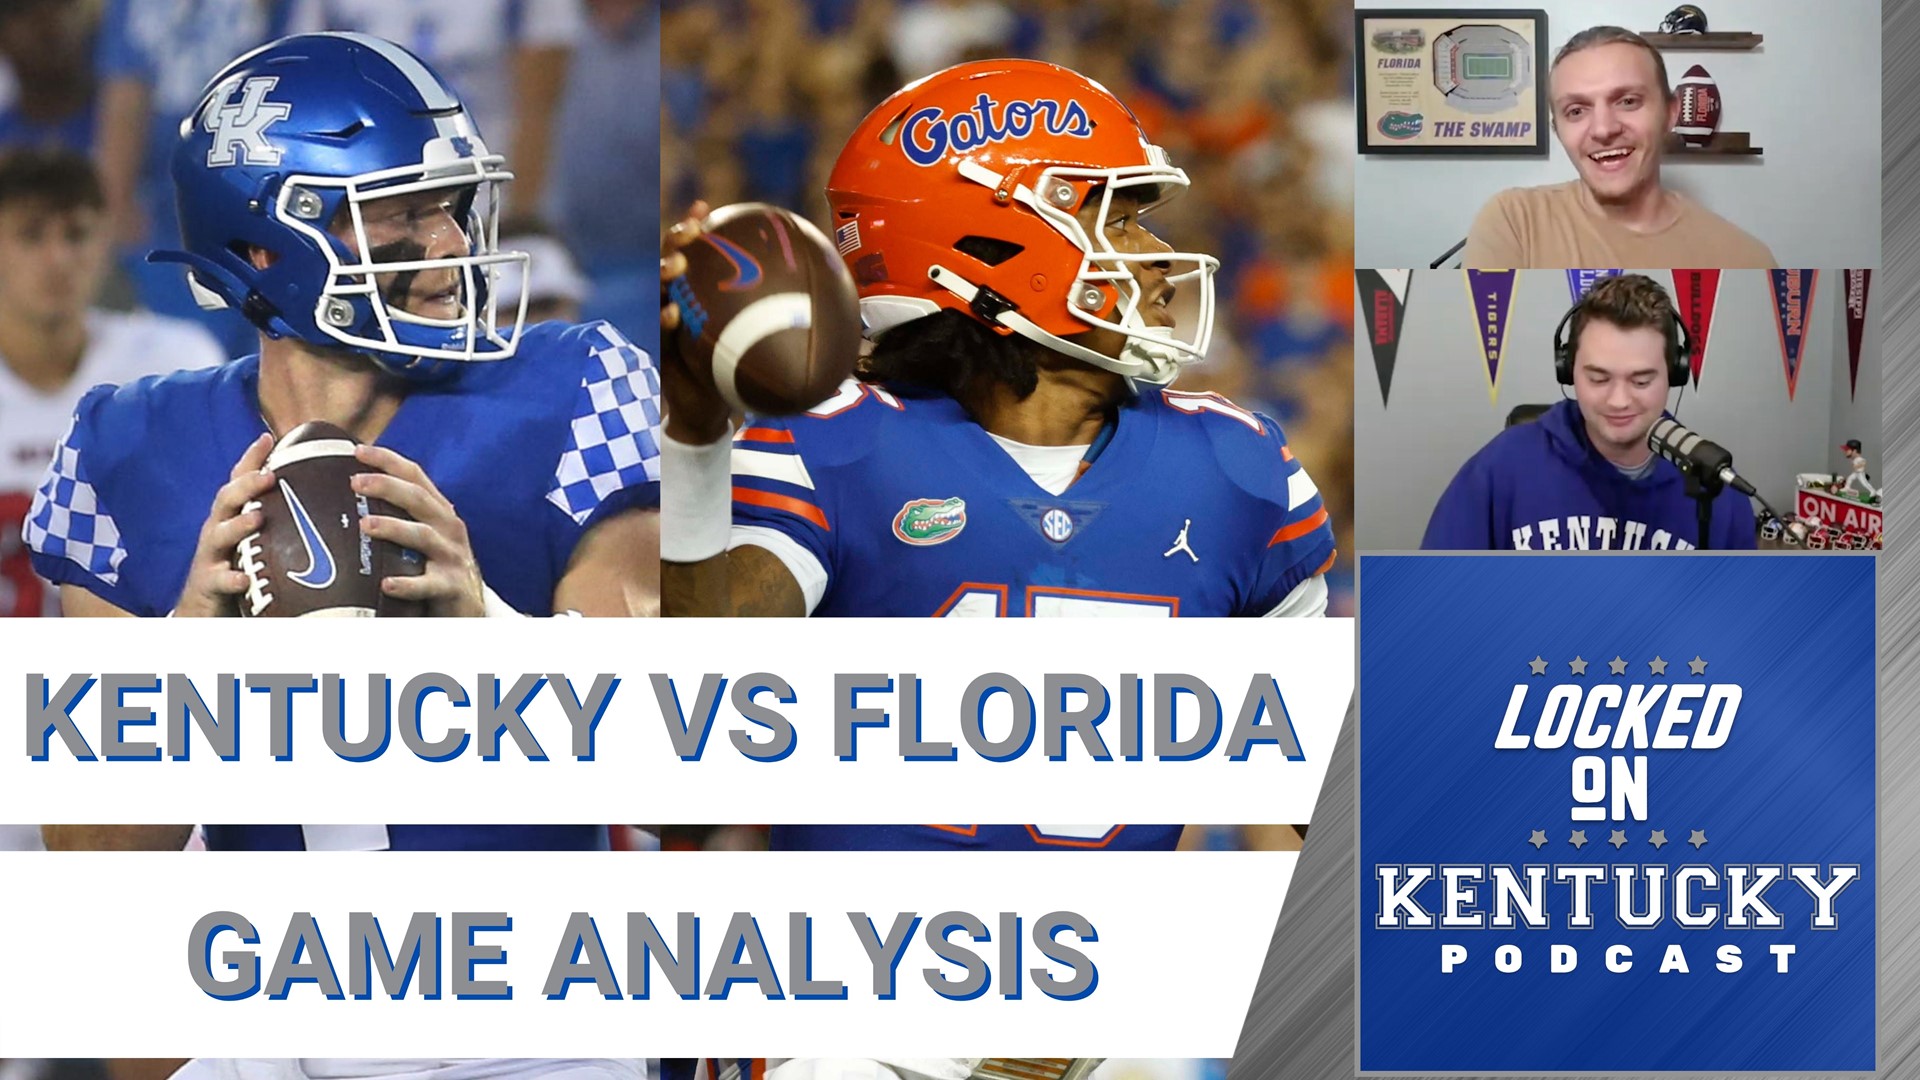 Host Lance Dawe provides analysis on a huge matchup between Kentucky and Florida